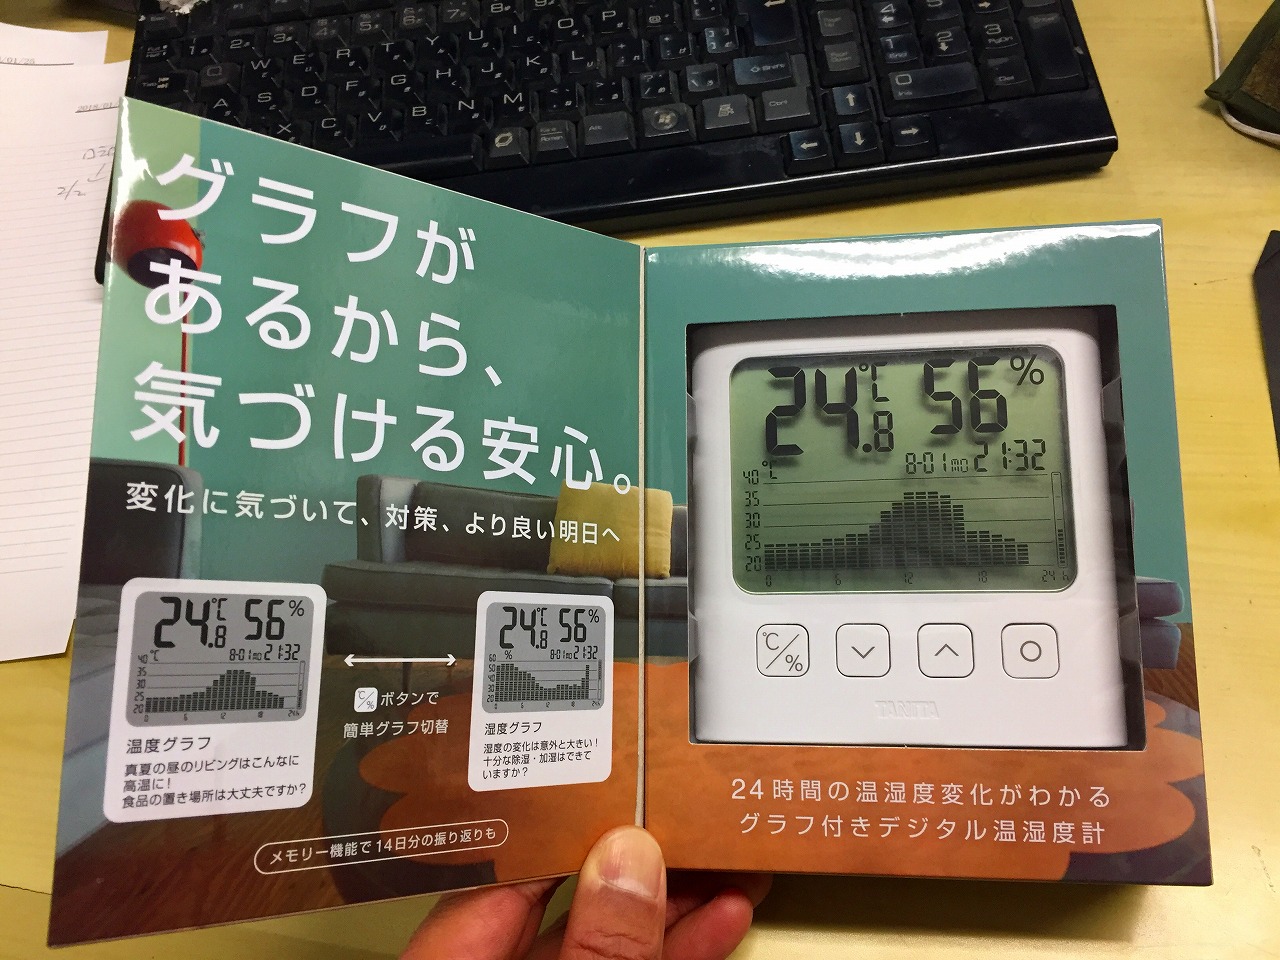 TT-581 デジタル温湿度計